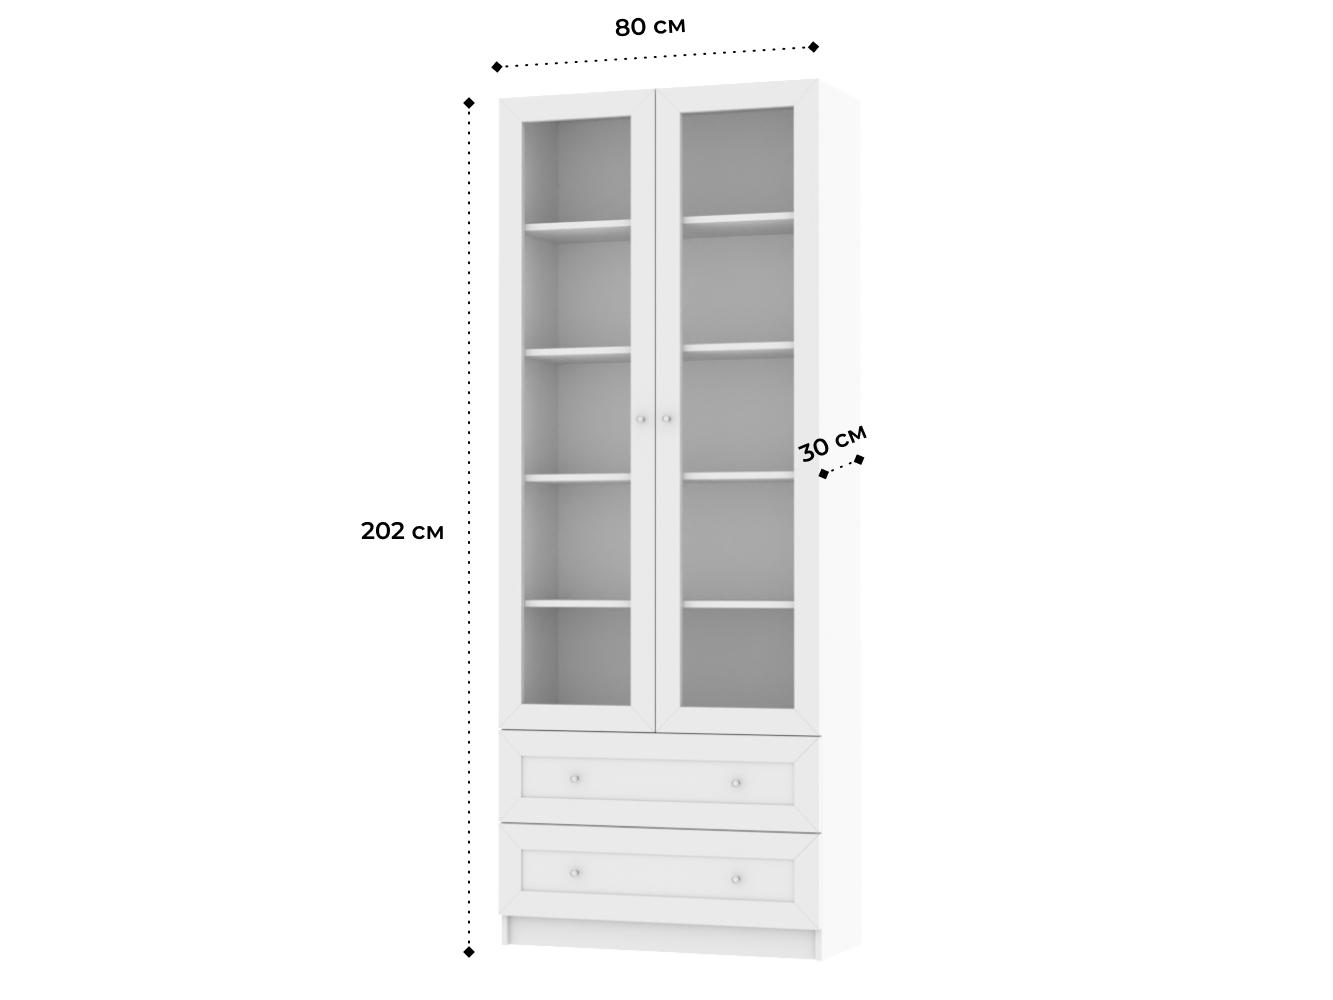  Книжный шкаф Билли 313 white ИКЕА (IKEA) изображение товара